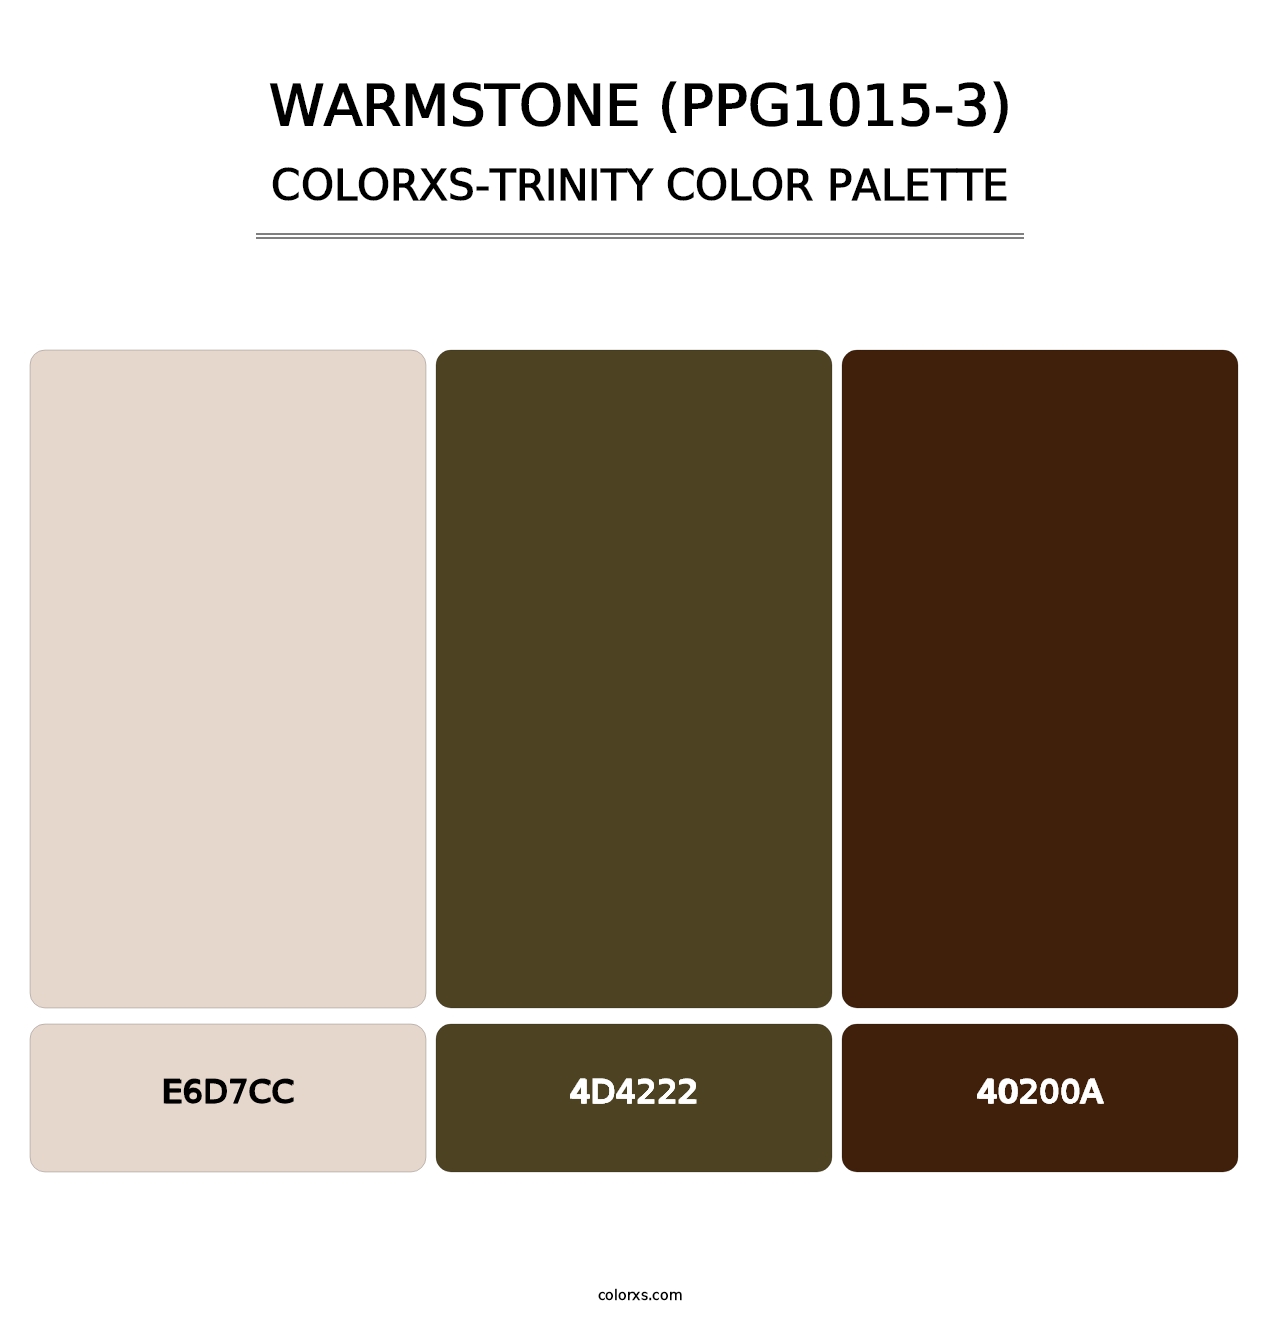 Warmstone (PPG1015-3) - Colorxs Trinity Palette